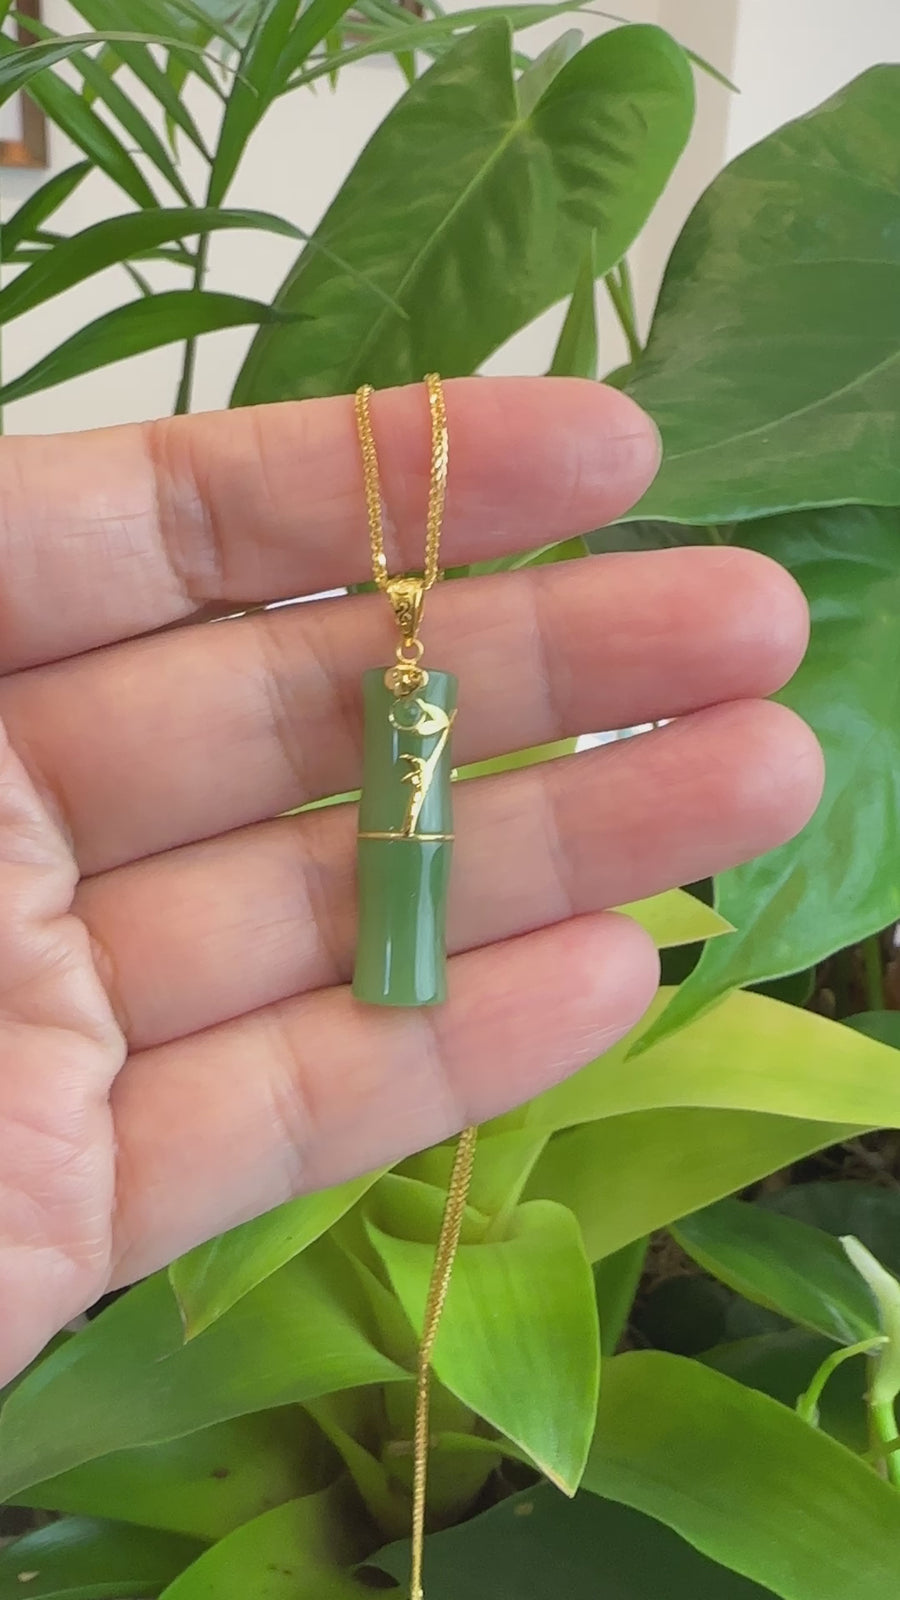 24k Yellow Gold Genuine Nephrite Apple Green Jade Bamboo Pendant Necklace